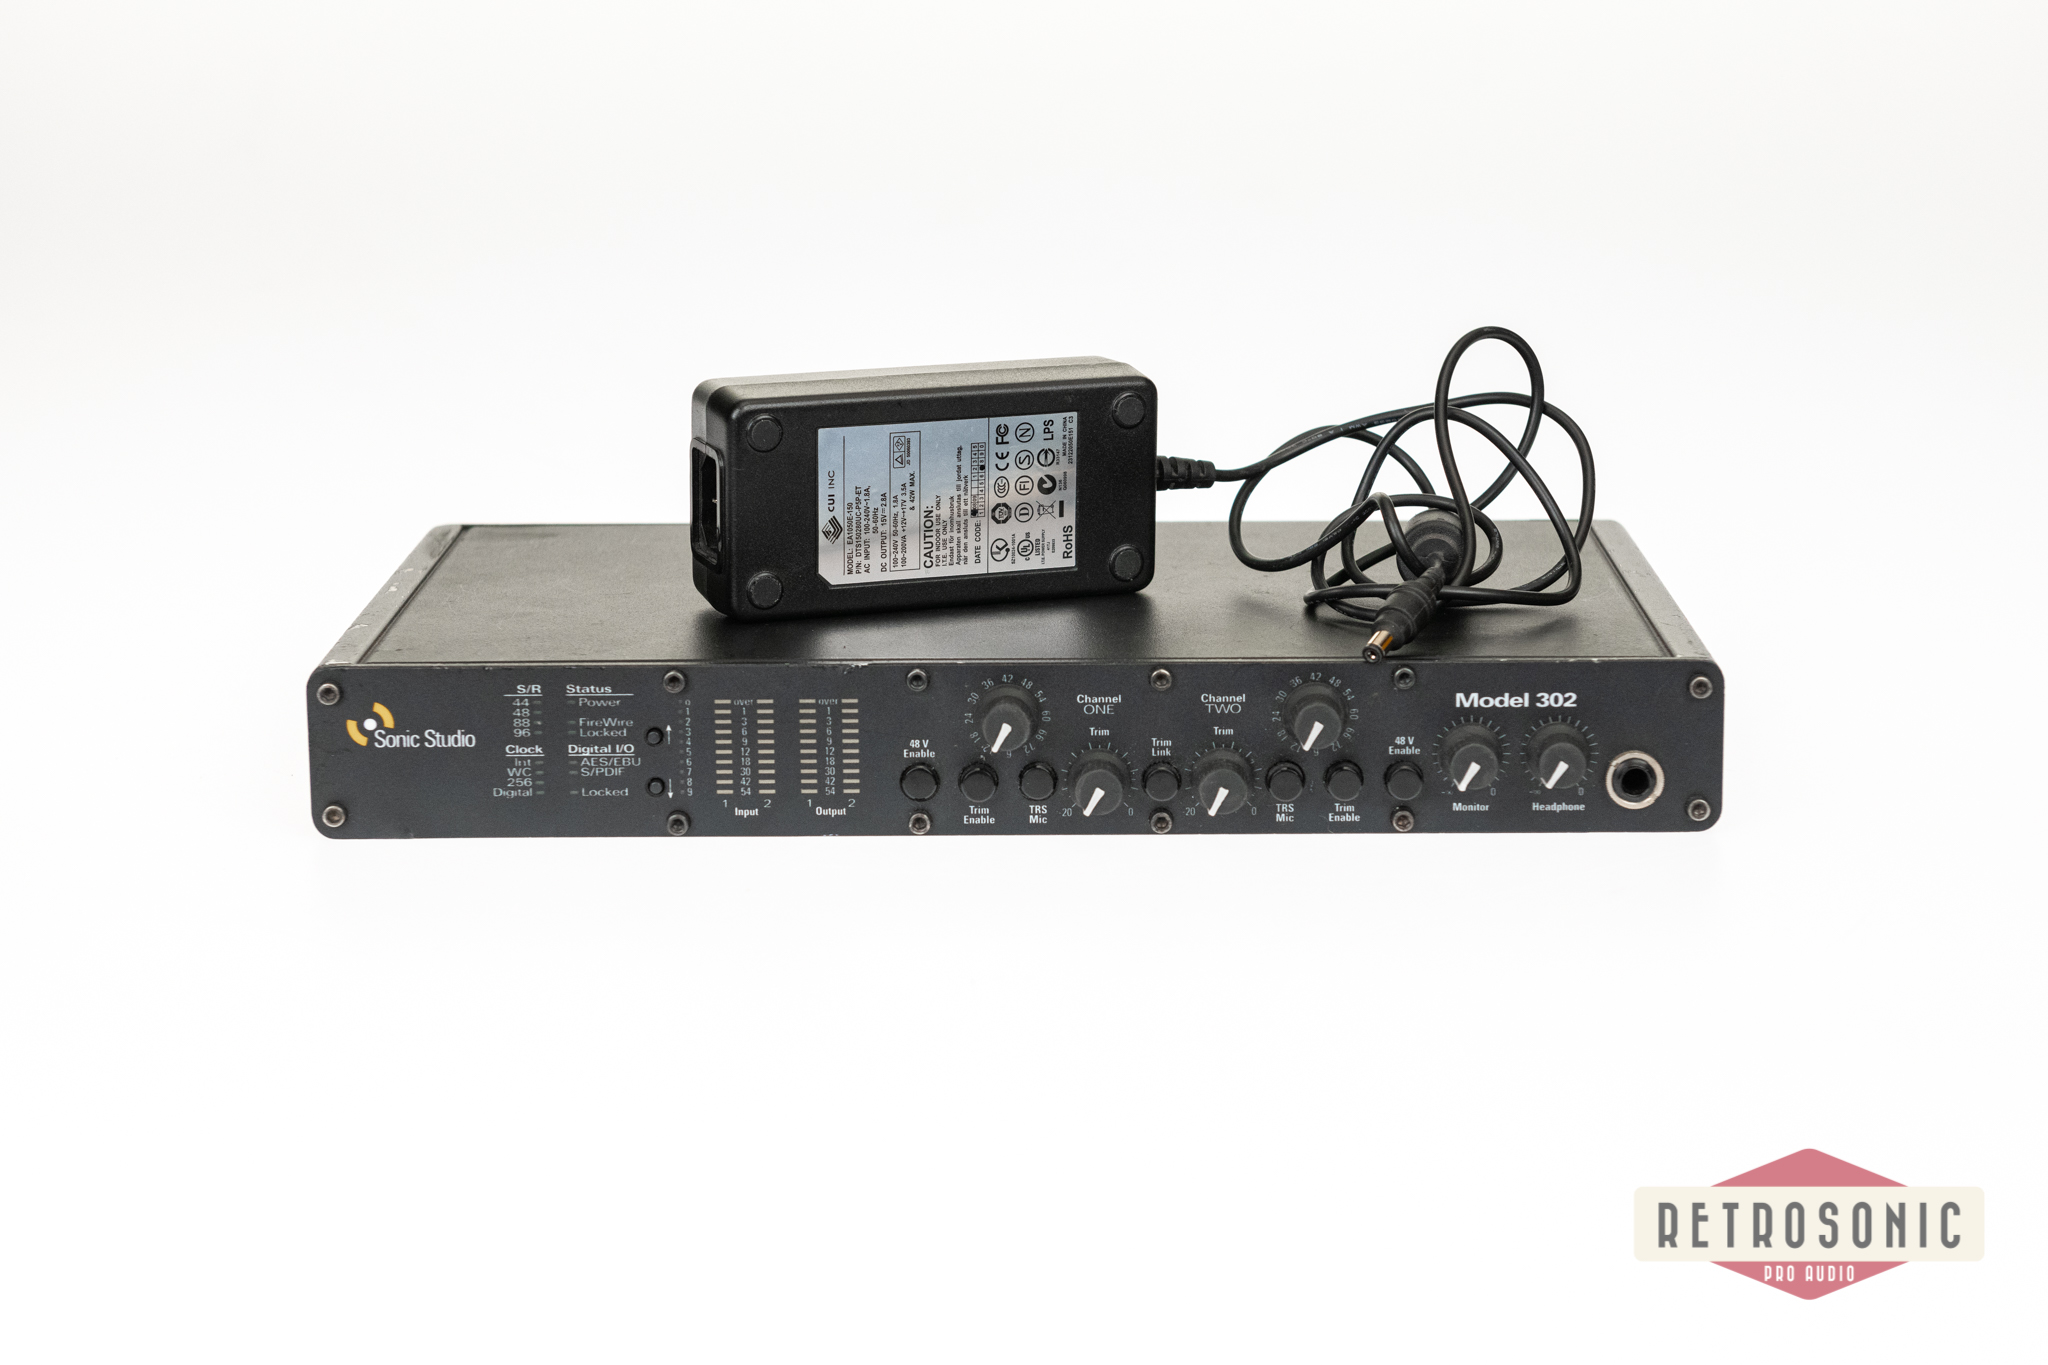 Sonic Studio Model 302 DSP I/O 2-ch Audio Interface (Metric Halo ULN-2)